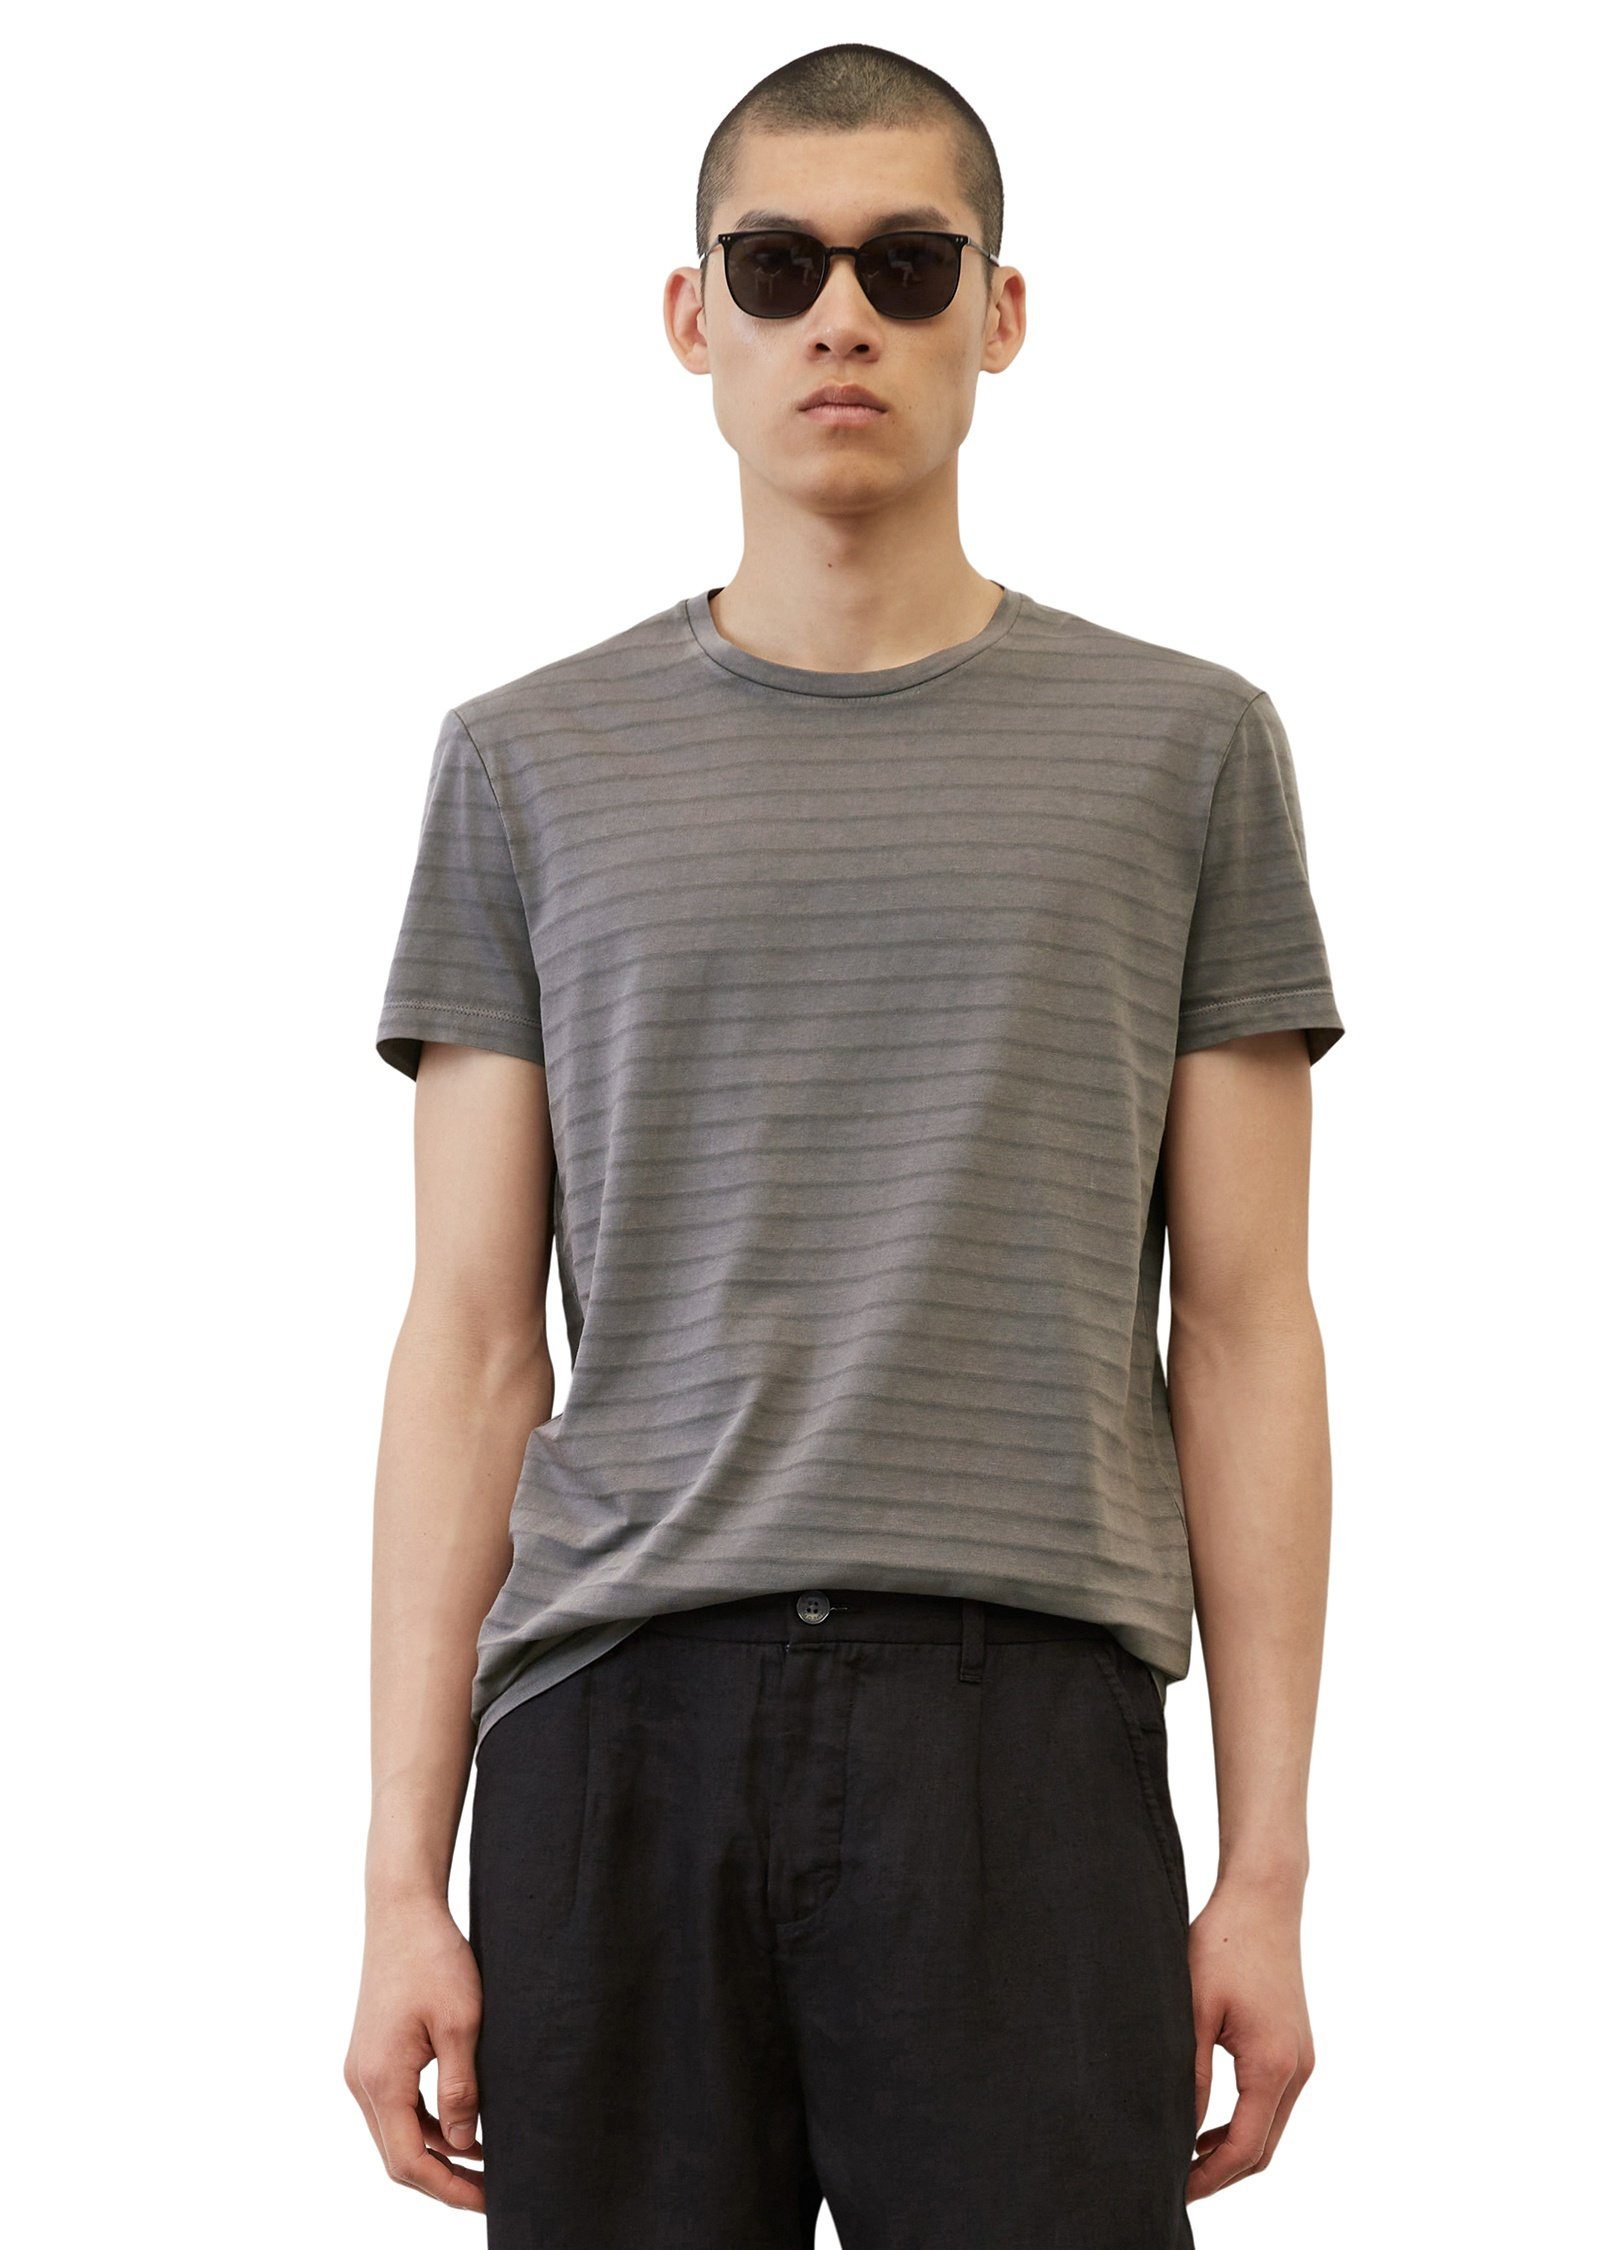 Marc O'Polo T-Shirt mit Cold-dye-Färbung grau